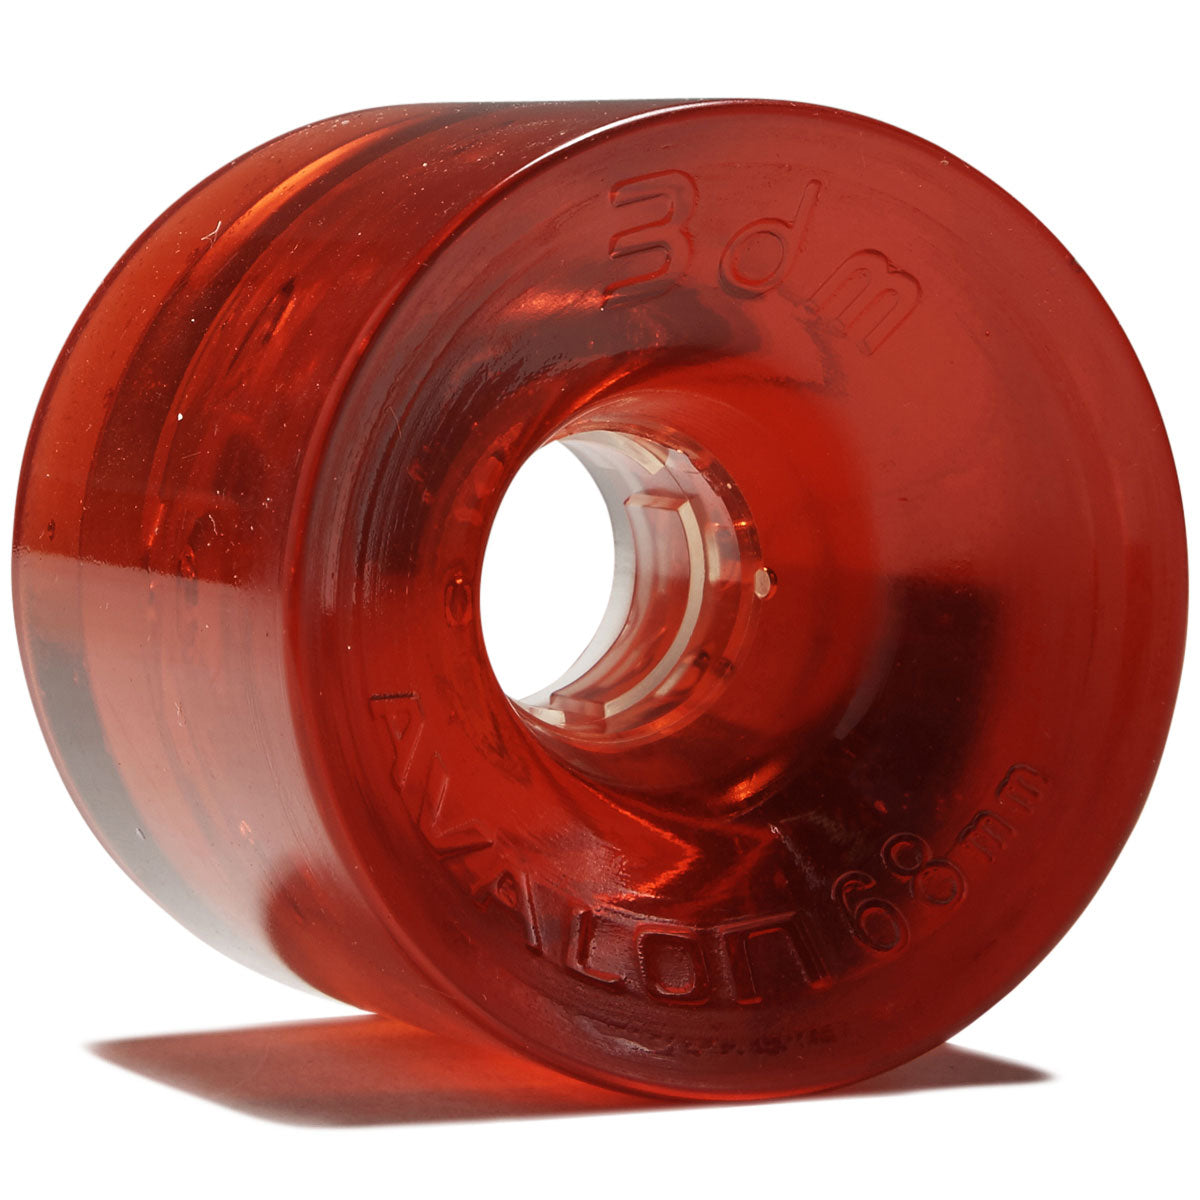 3DM Avalon 78a Longboard Wheels - Clear Red - 68mm image 1